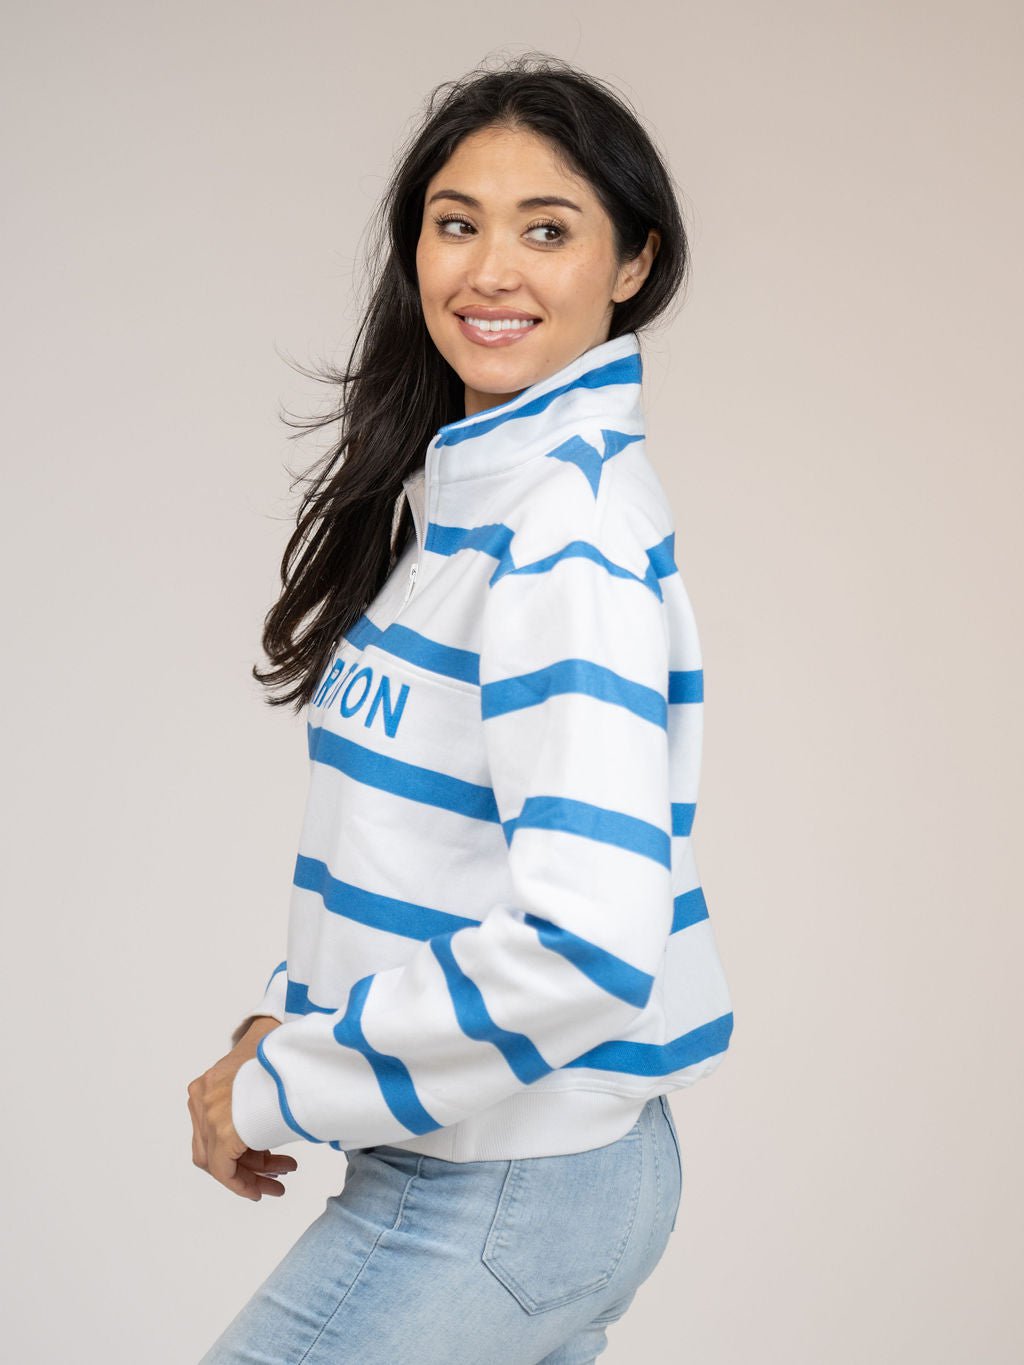 Beau & Ro Dress Small SAMPLE | Charleston Half Zip Sweatshirt in Blue Stripes | Small